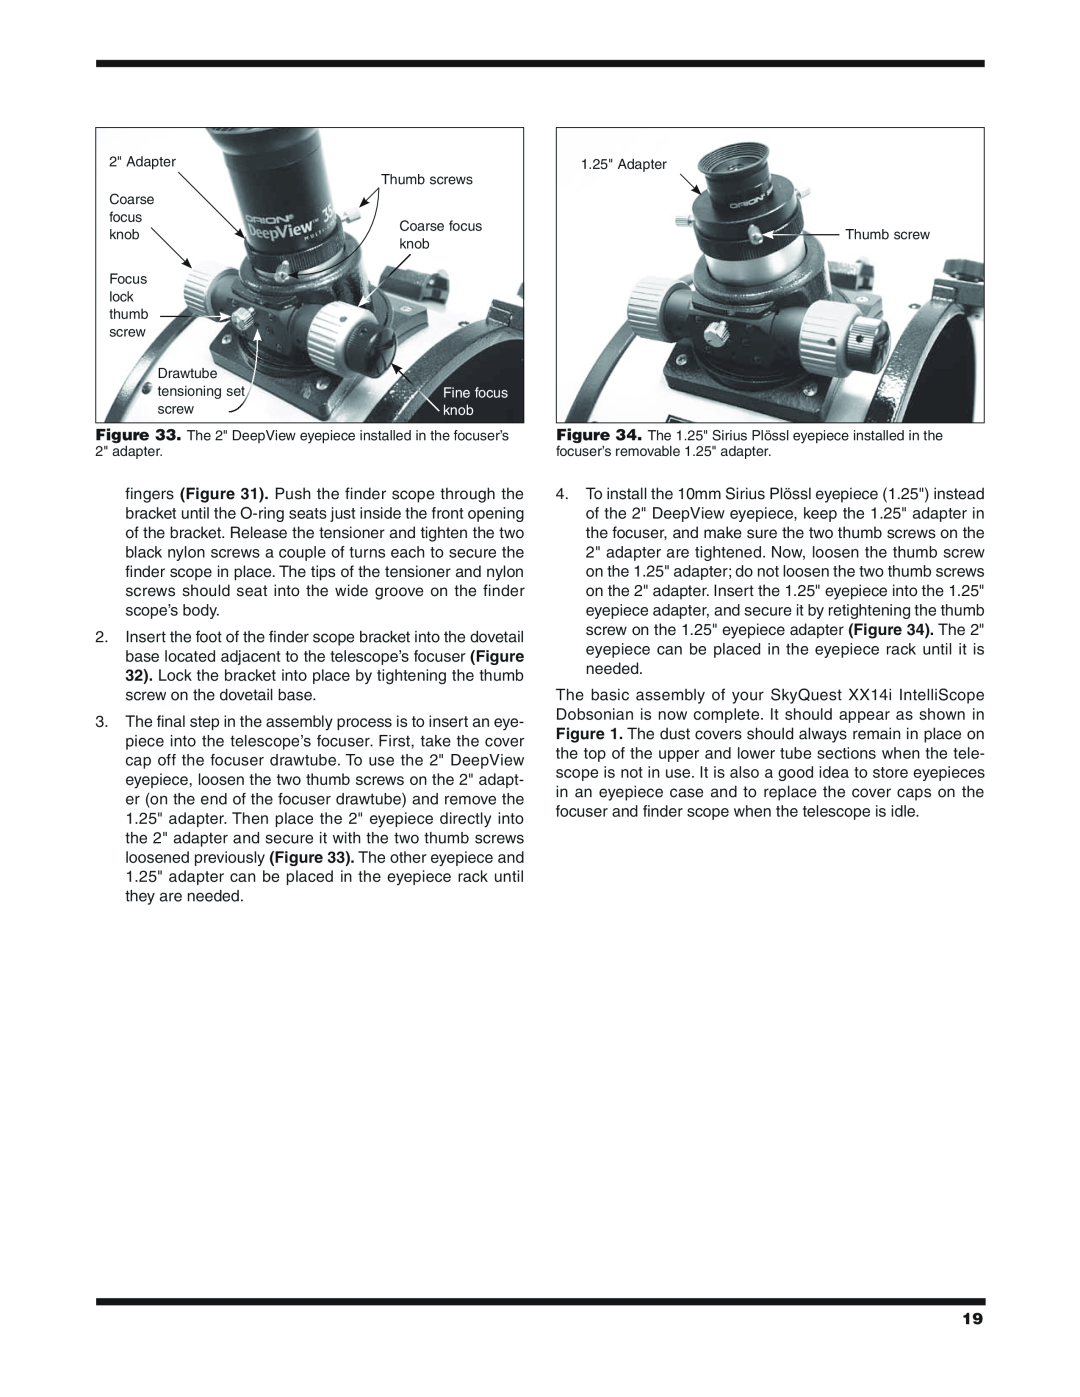 Orion XX14I instruction manual knob, Coarse focus 